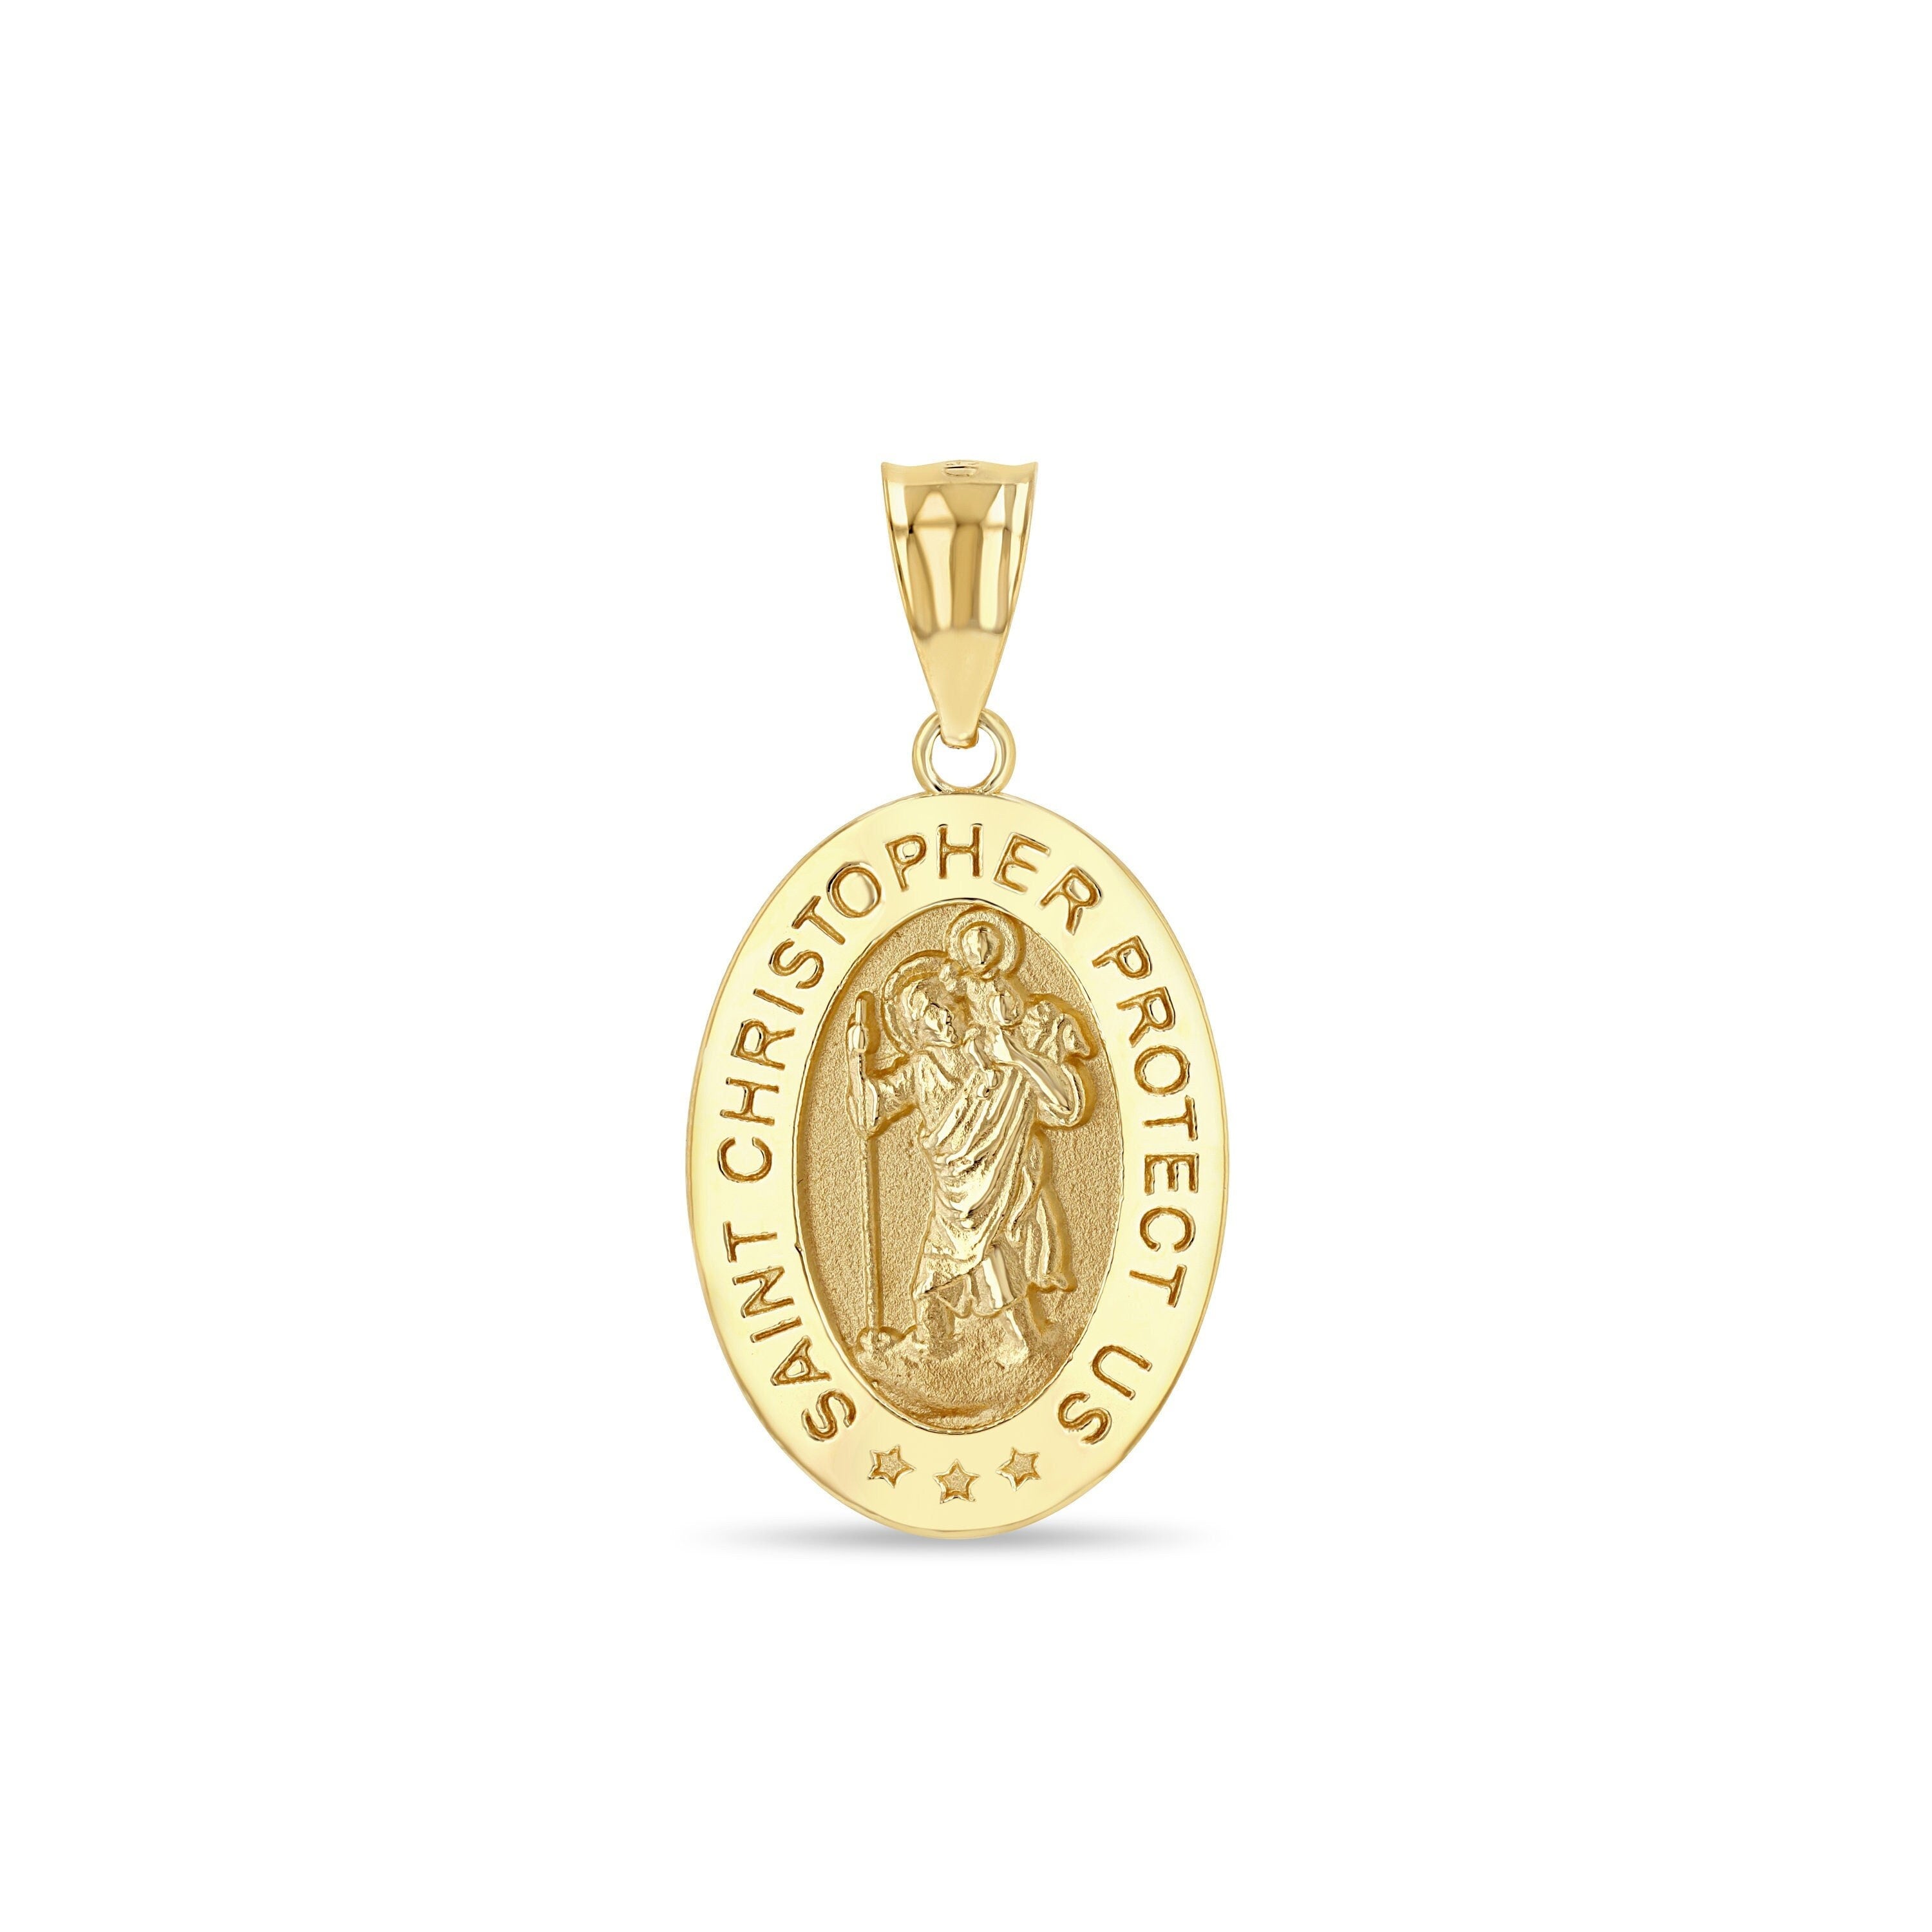 14k solid gold St. Christopher ( Protector of Children) pendant